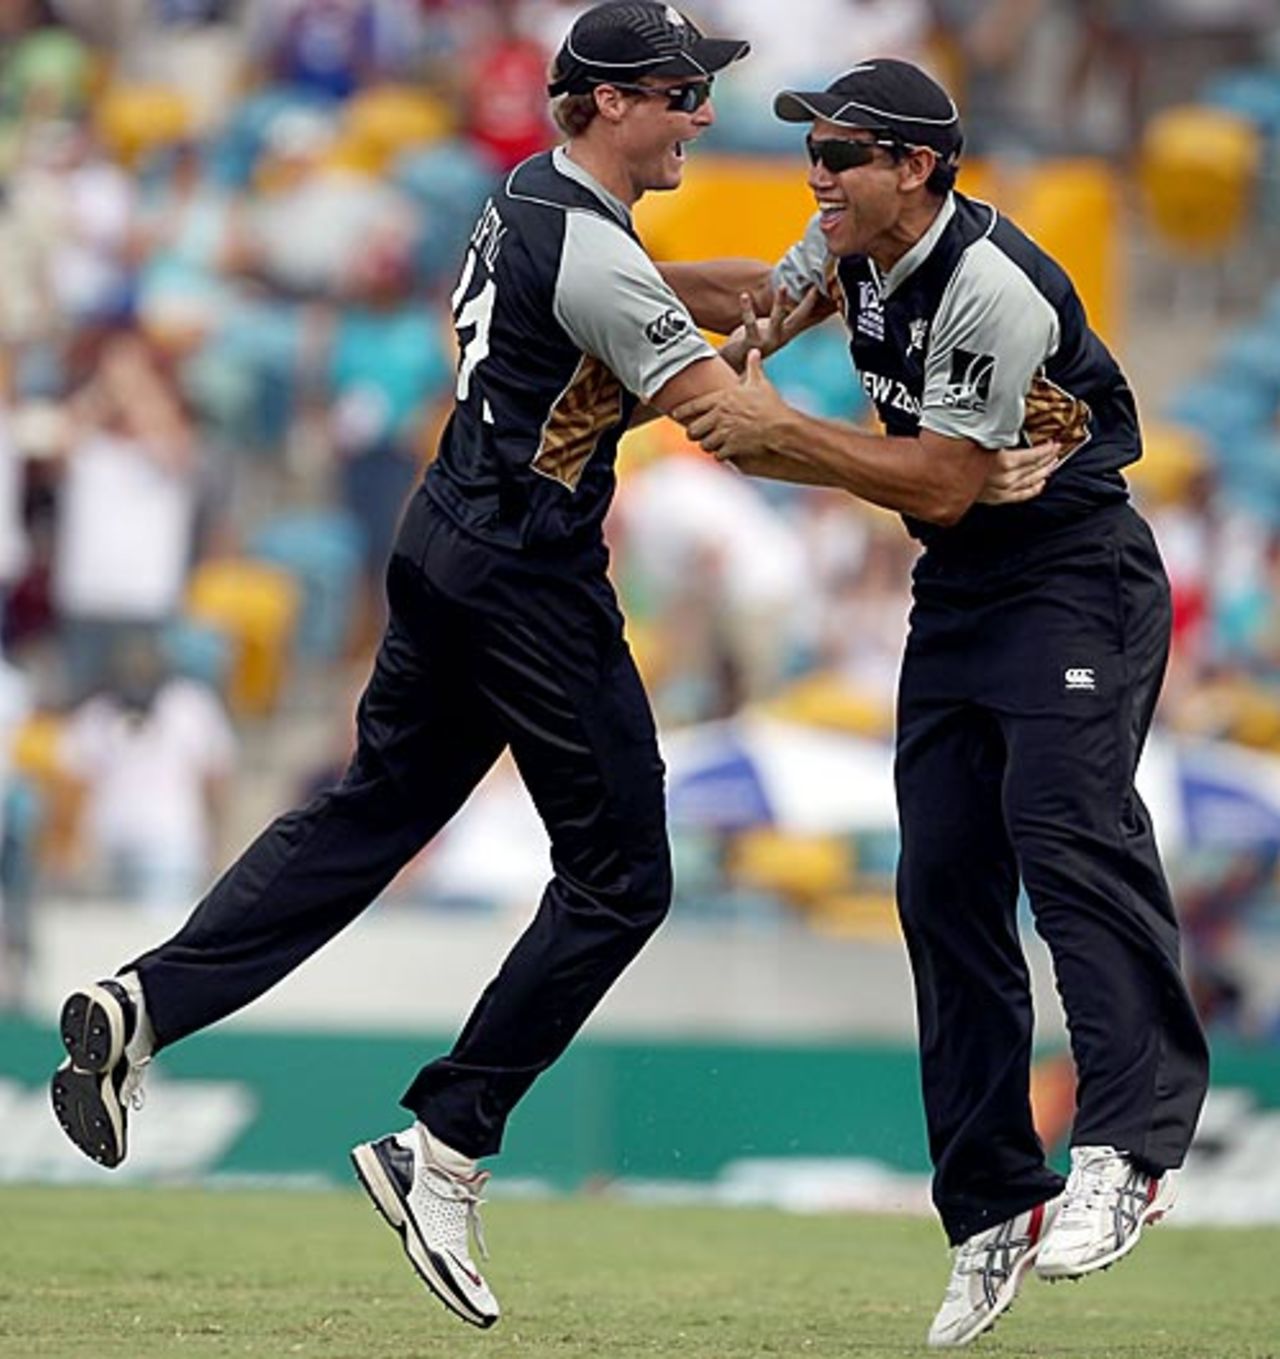 Martin Guptill and Ross Taylor celebrate New Zealand's win, New Zealand v Pakistan, Super Eights, Group E, World Twenty20, Barbados, May 8, 2010

